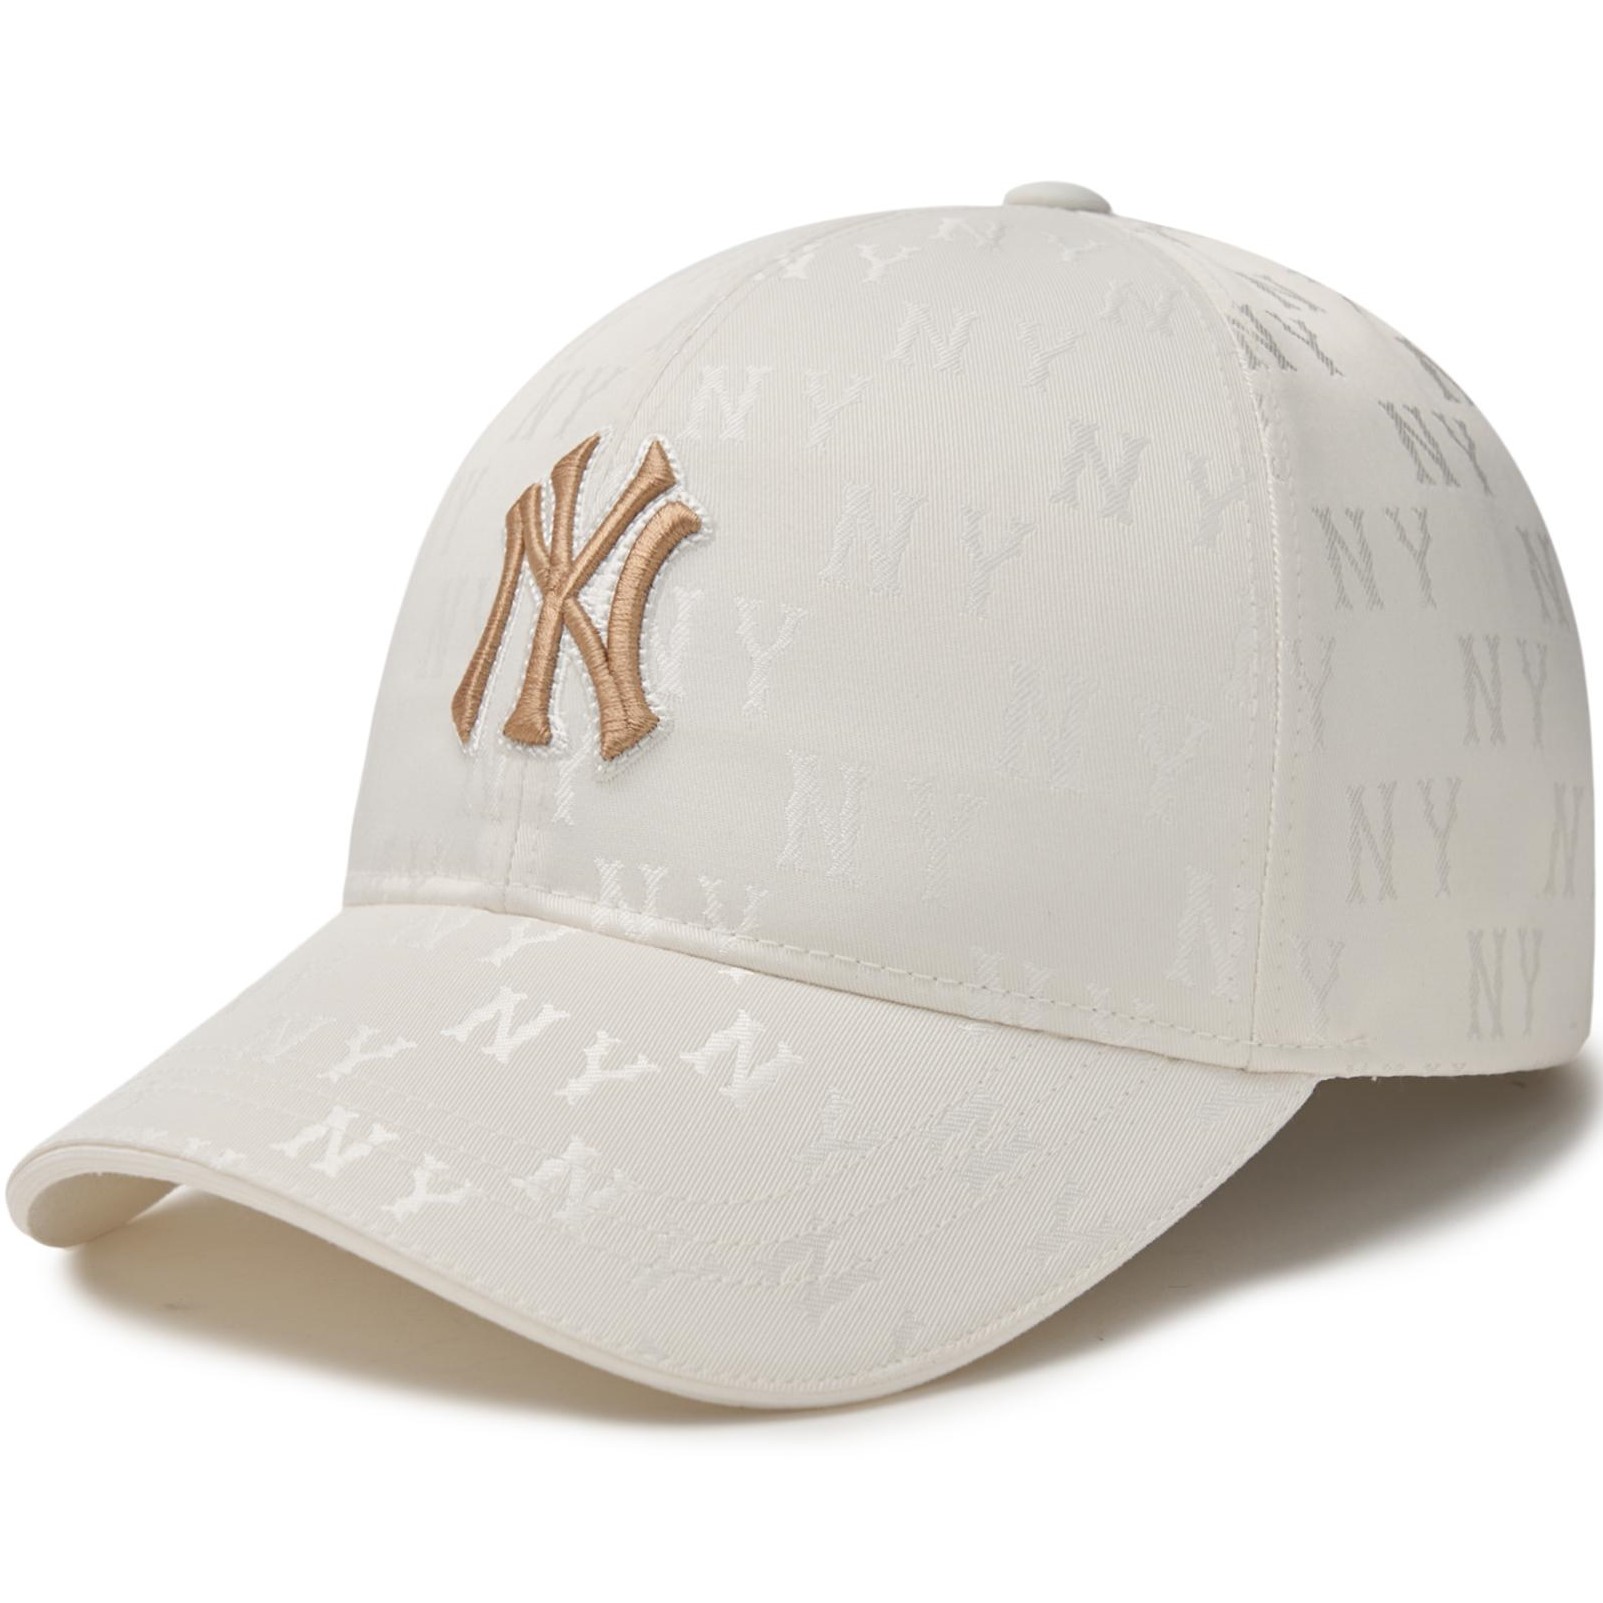 NÓN KẾT UNISEX MLB CLASSIC MONOGRAM STRUCTURED BALL CAP NEW YORK YANKEES BEIGE 3ACPM014N-50CRS 9